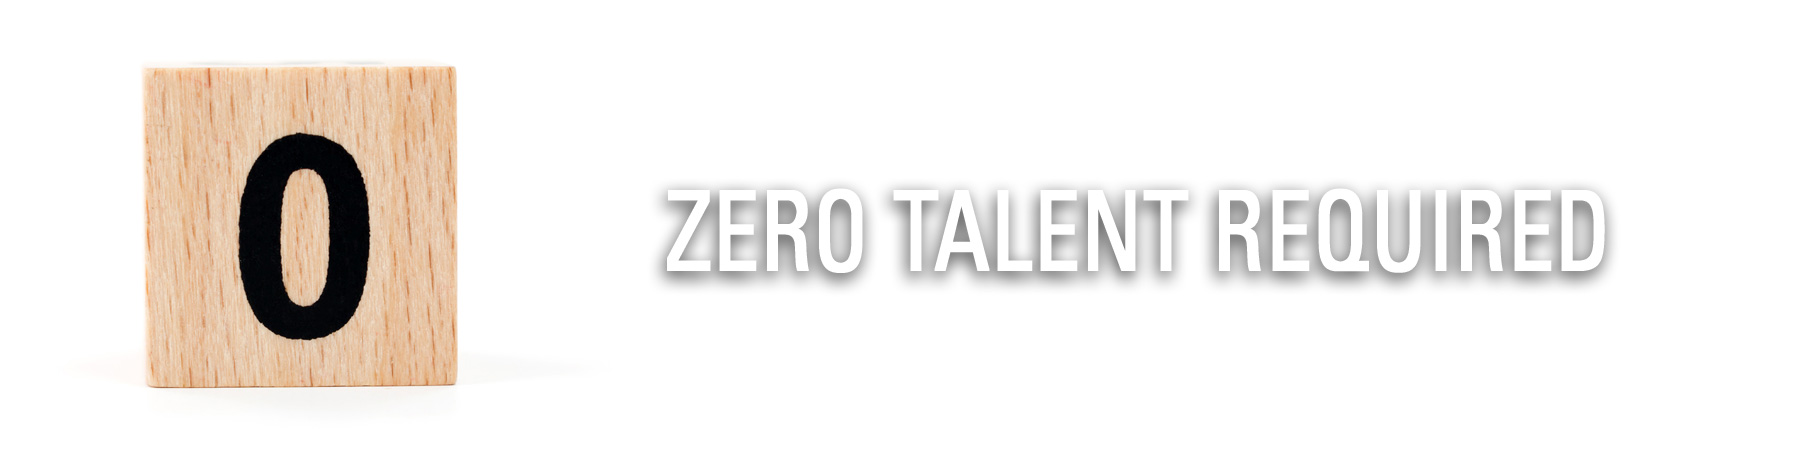 Zero Talent Required